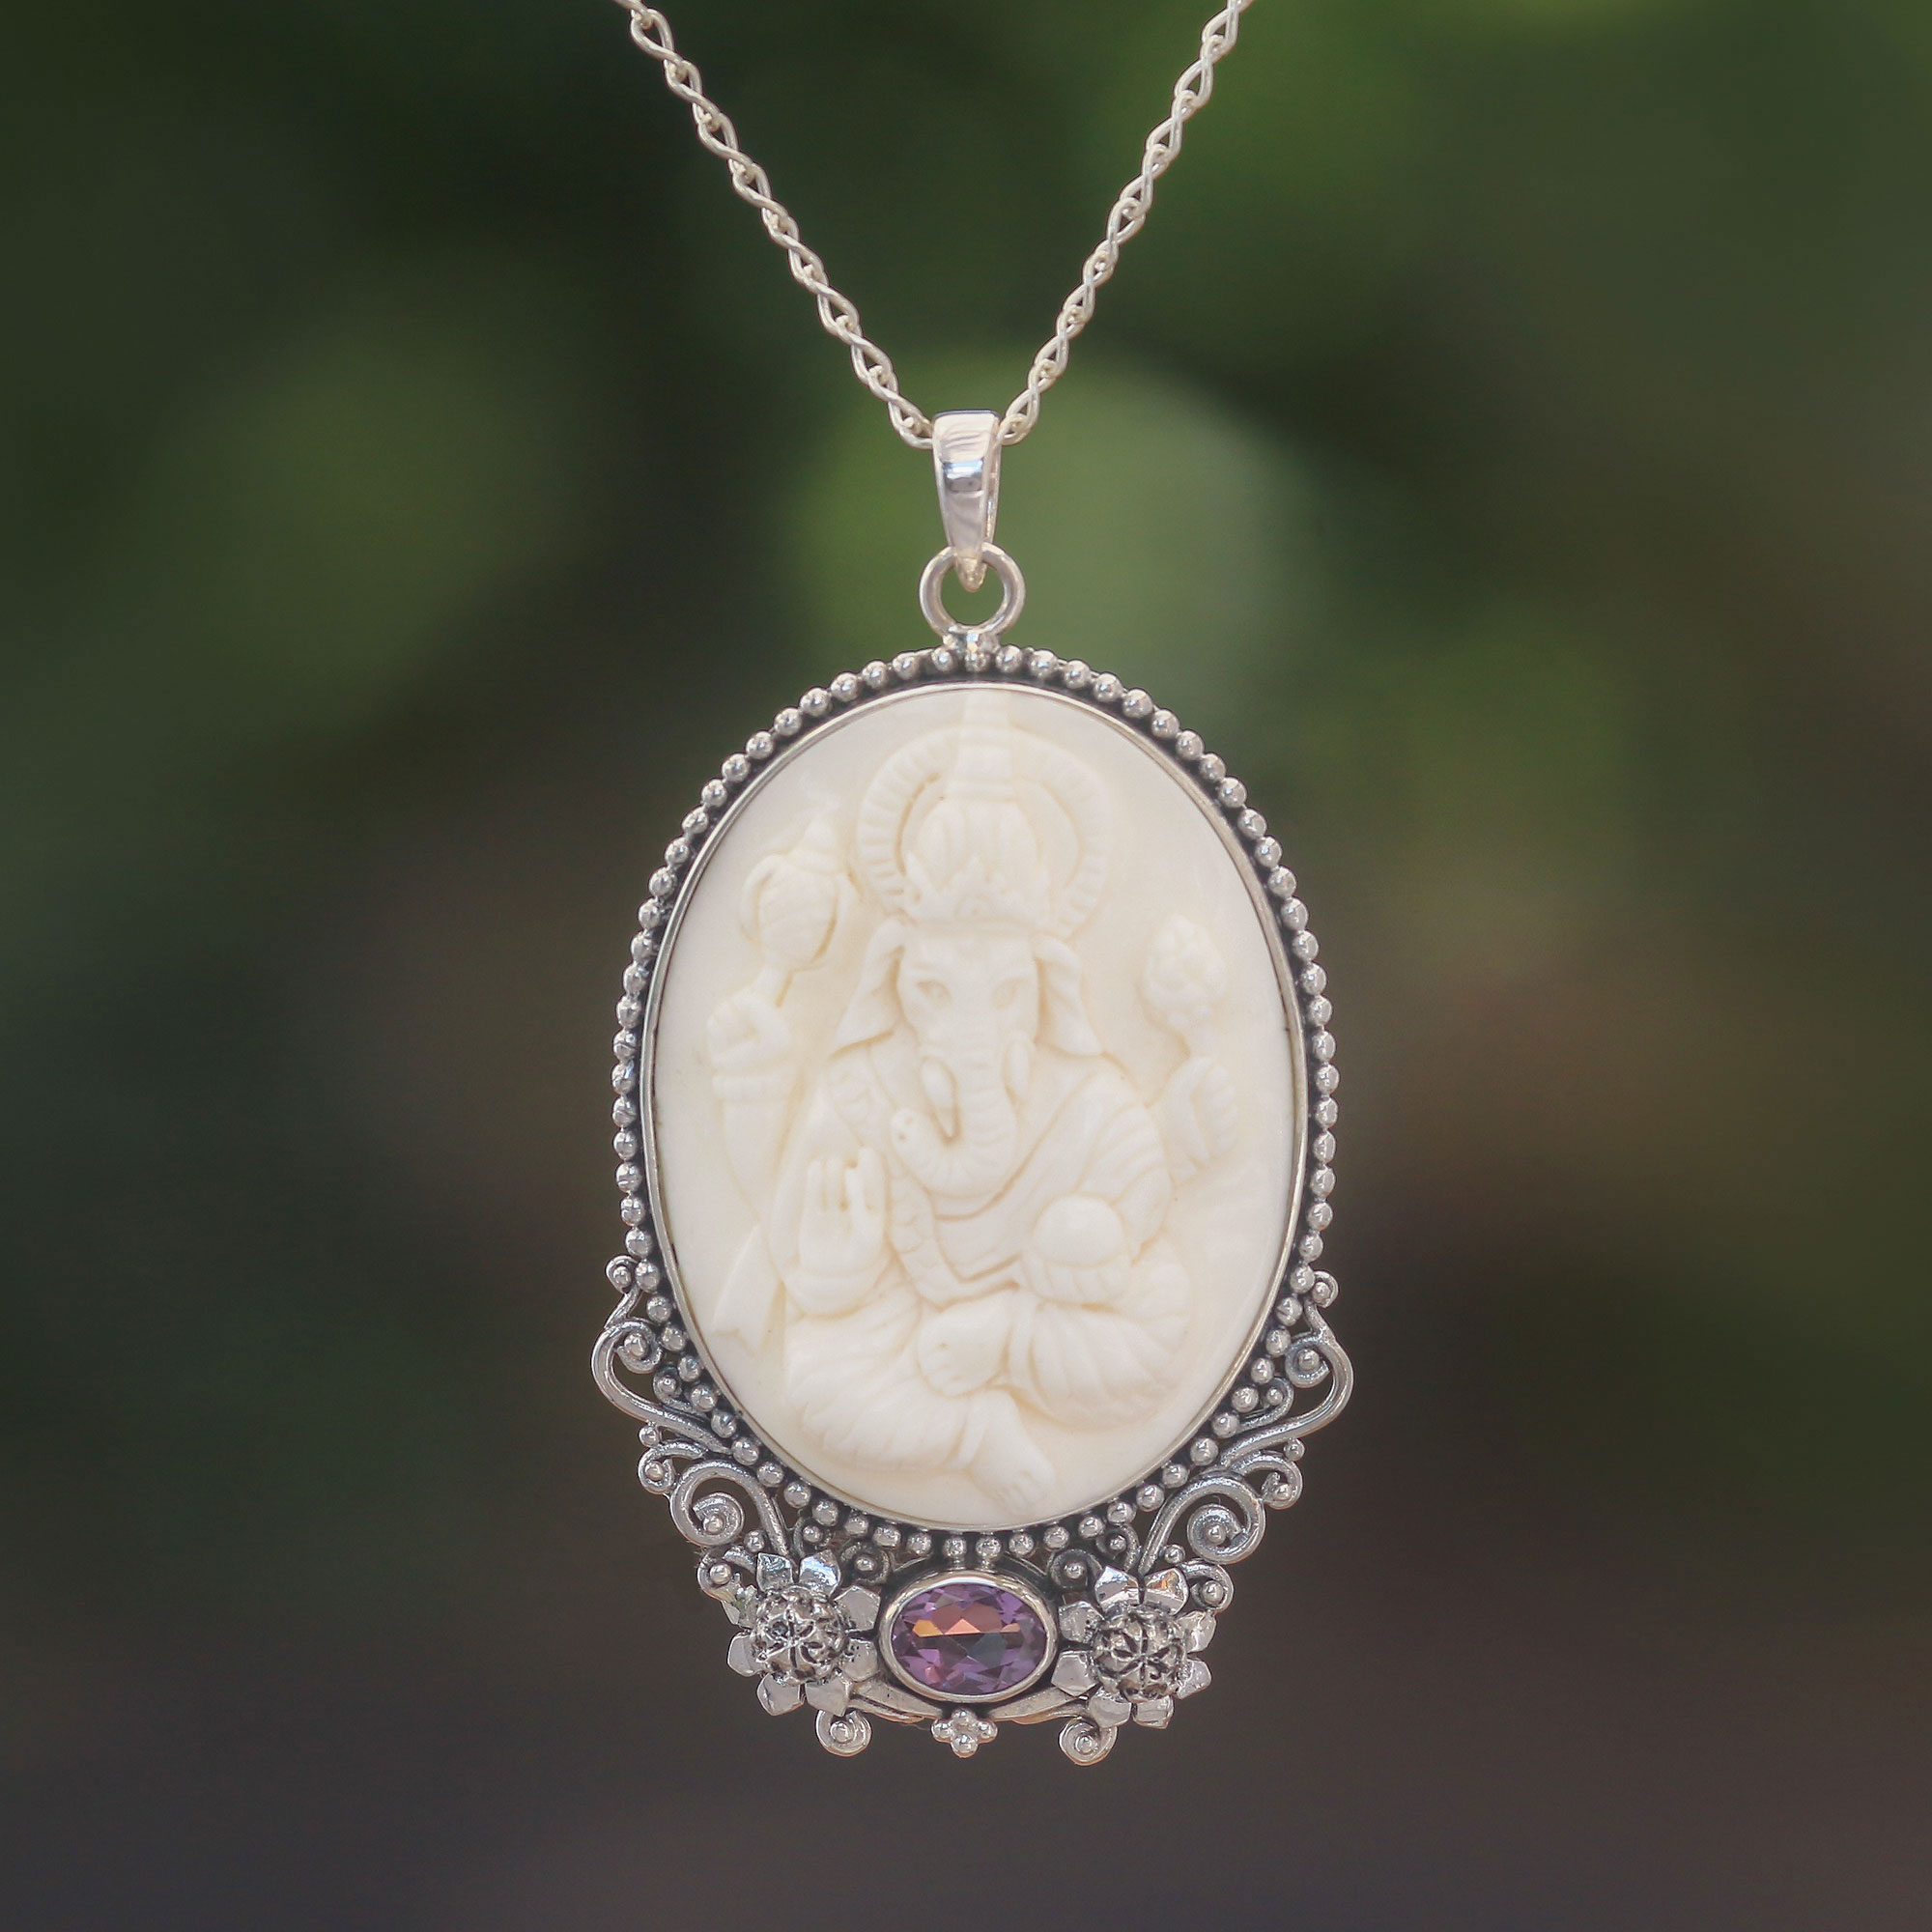 Amethyst and Bone Sterling Silver Ganesha Necklace from Bali, "Ganesha Blessing"